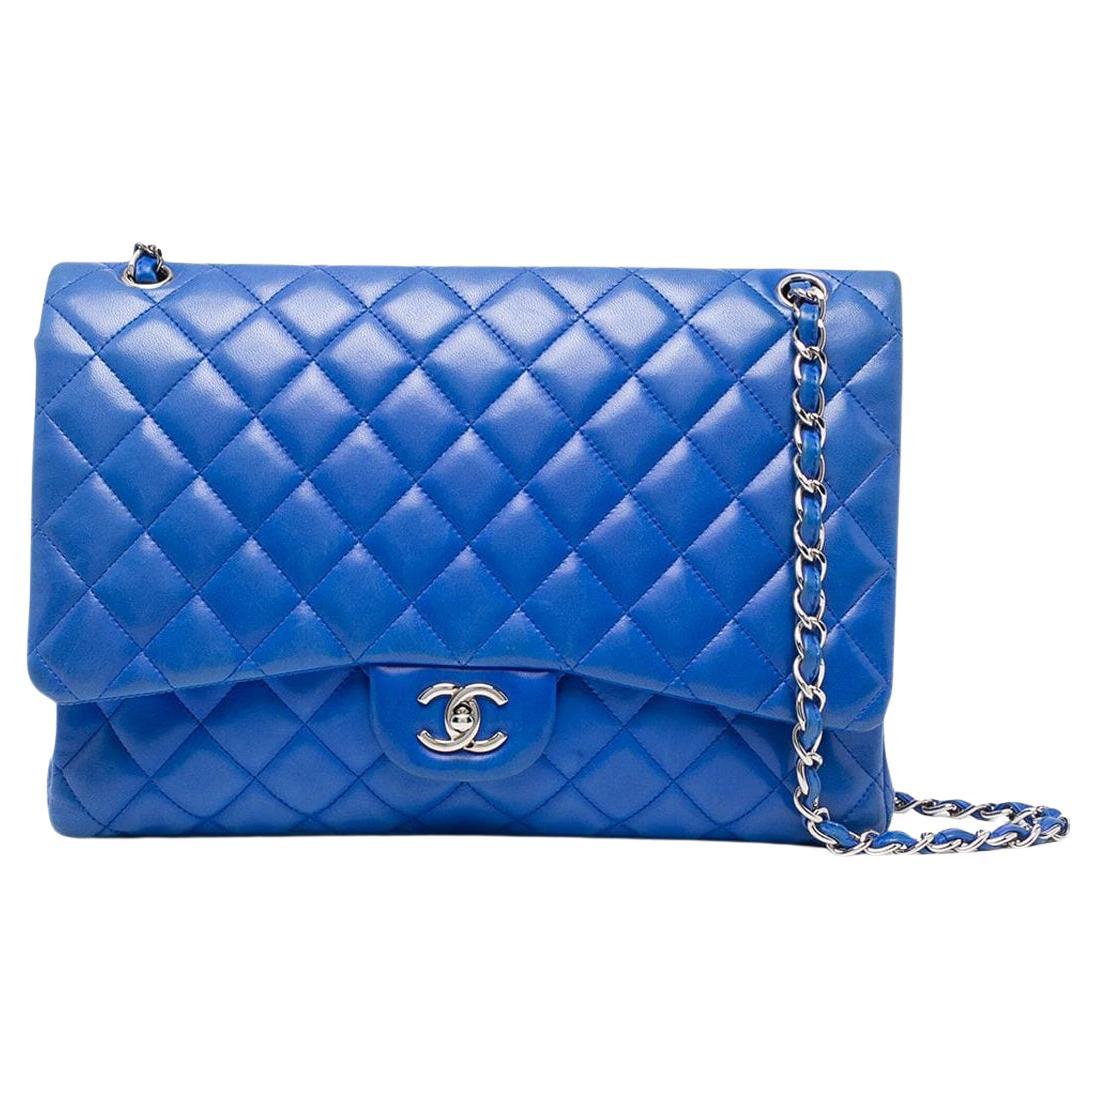 Chanel Blue Maxi Flap Bag